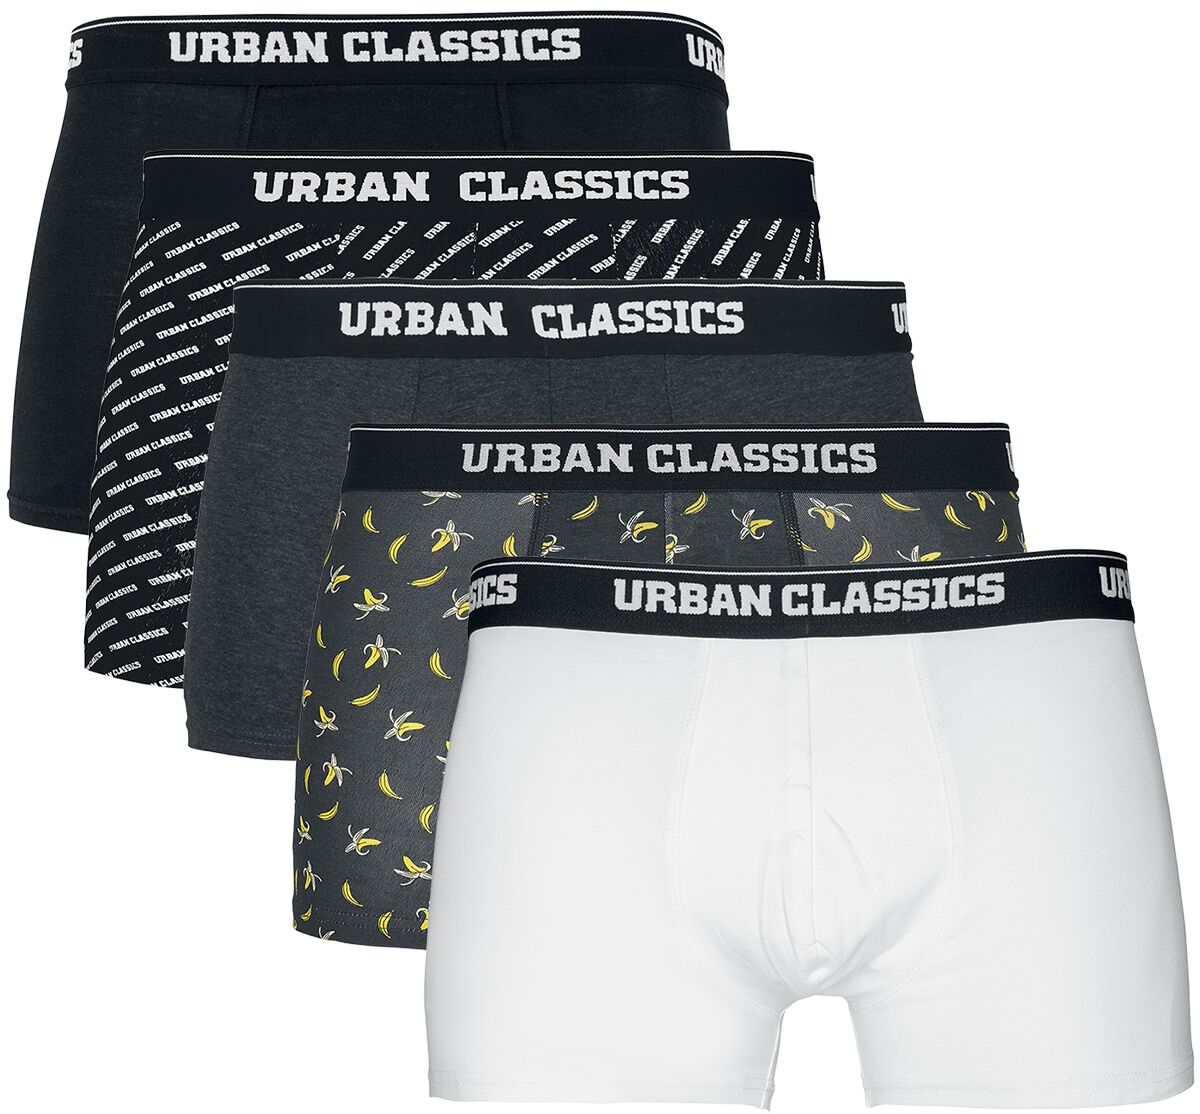 Urban Classics Boxer Shorts 5-Pack Boxers Set black grey white